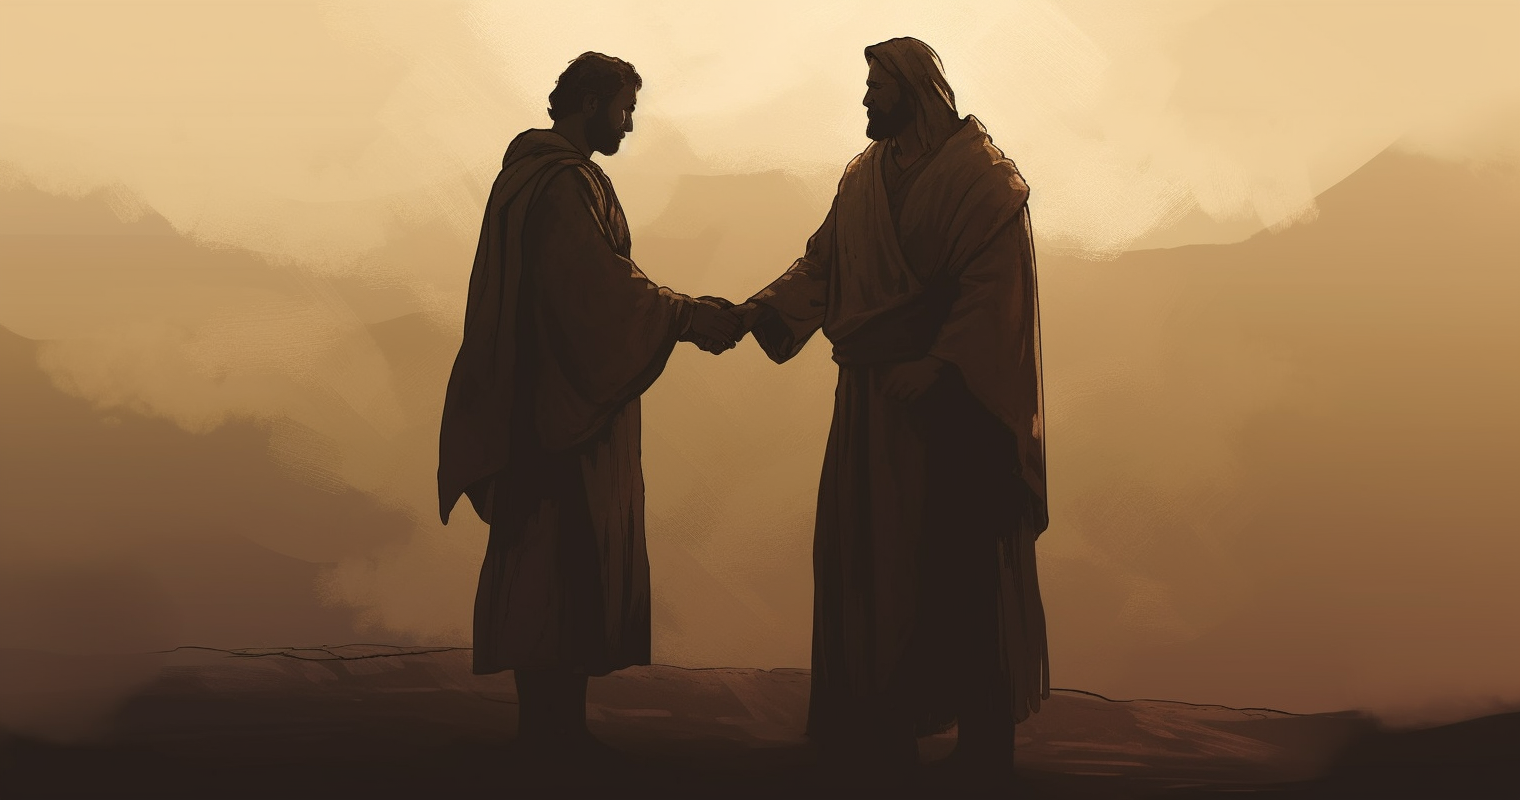 Image depicting forgiveness in a biblical context